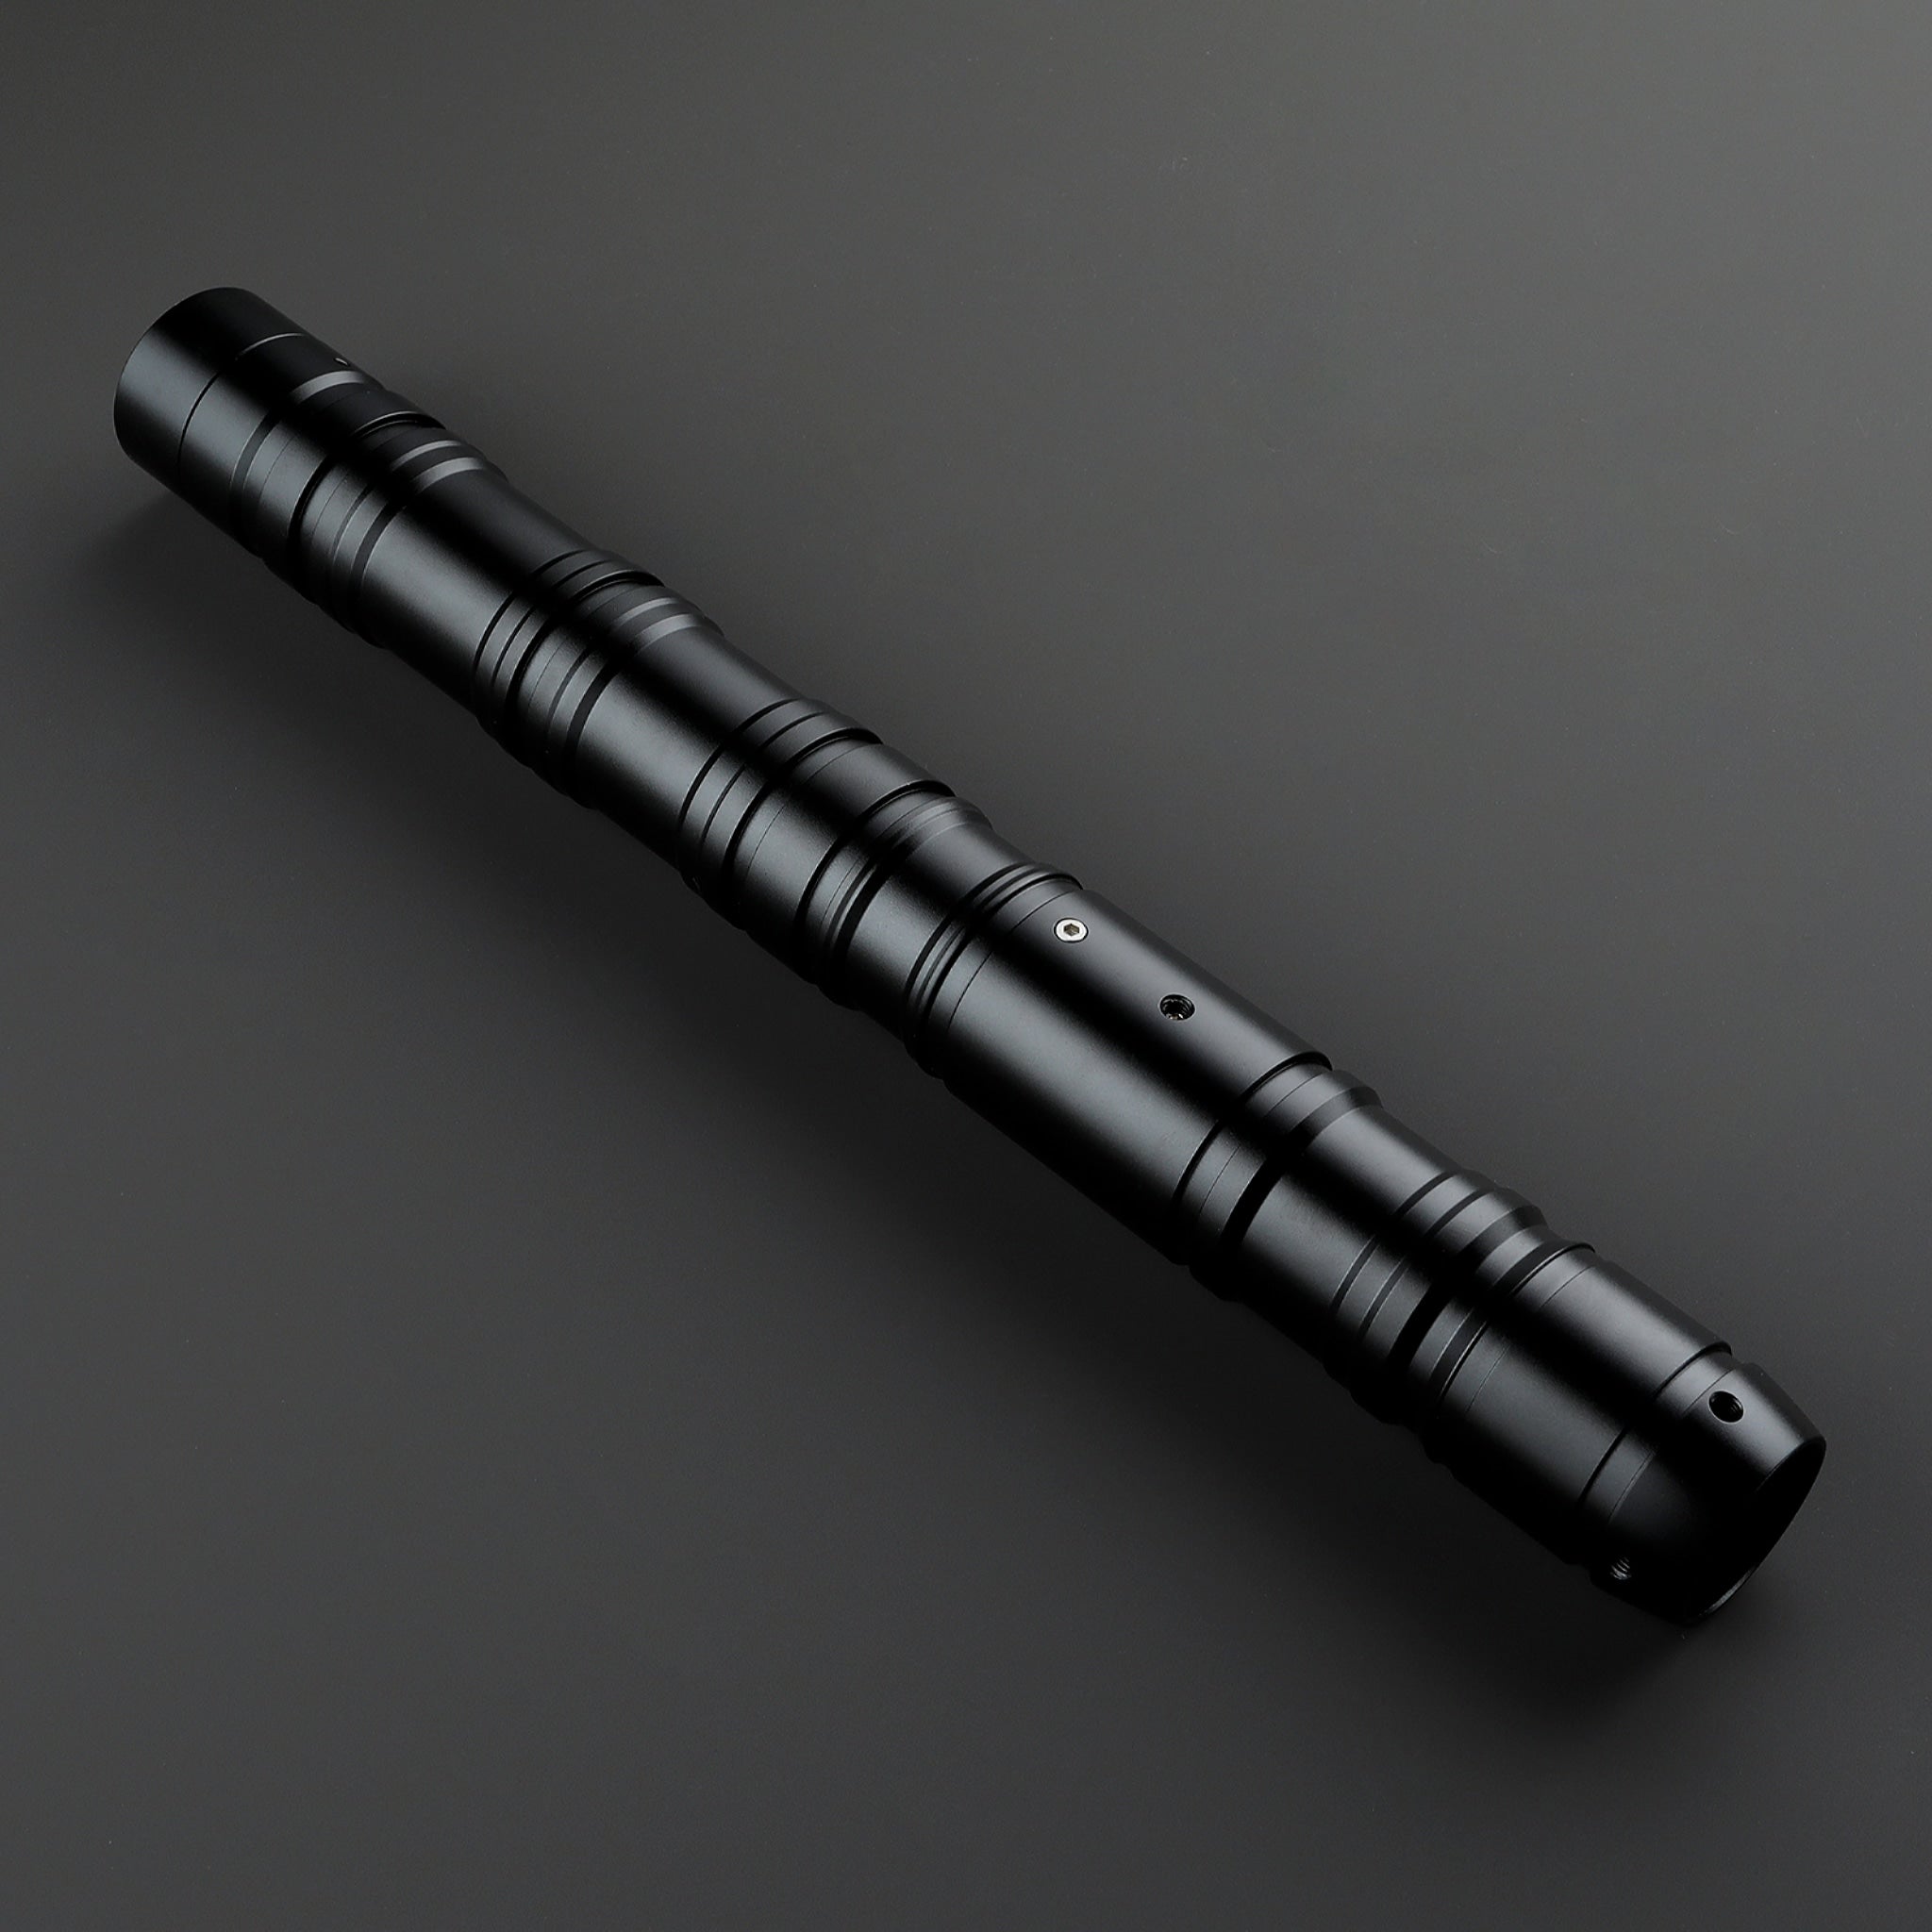 Star Wars No.036 Black Baselit Combat Lightsaber RGB Replica